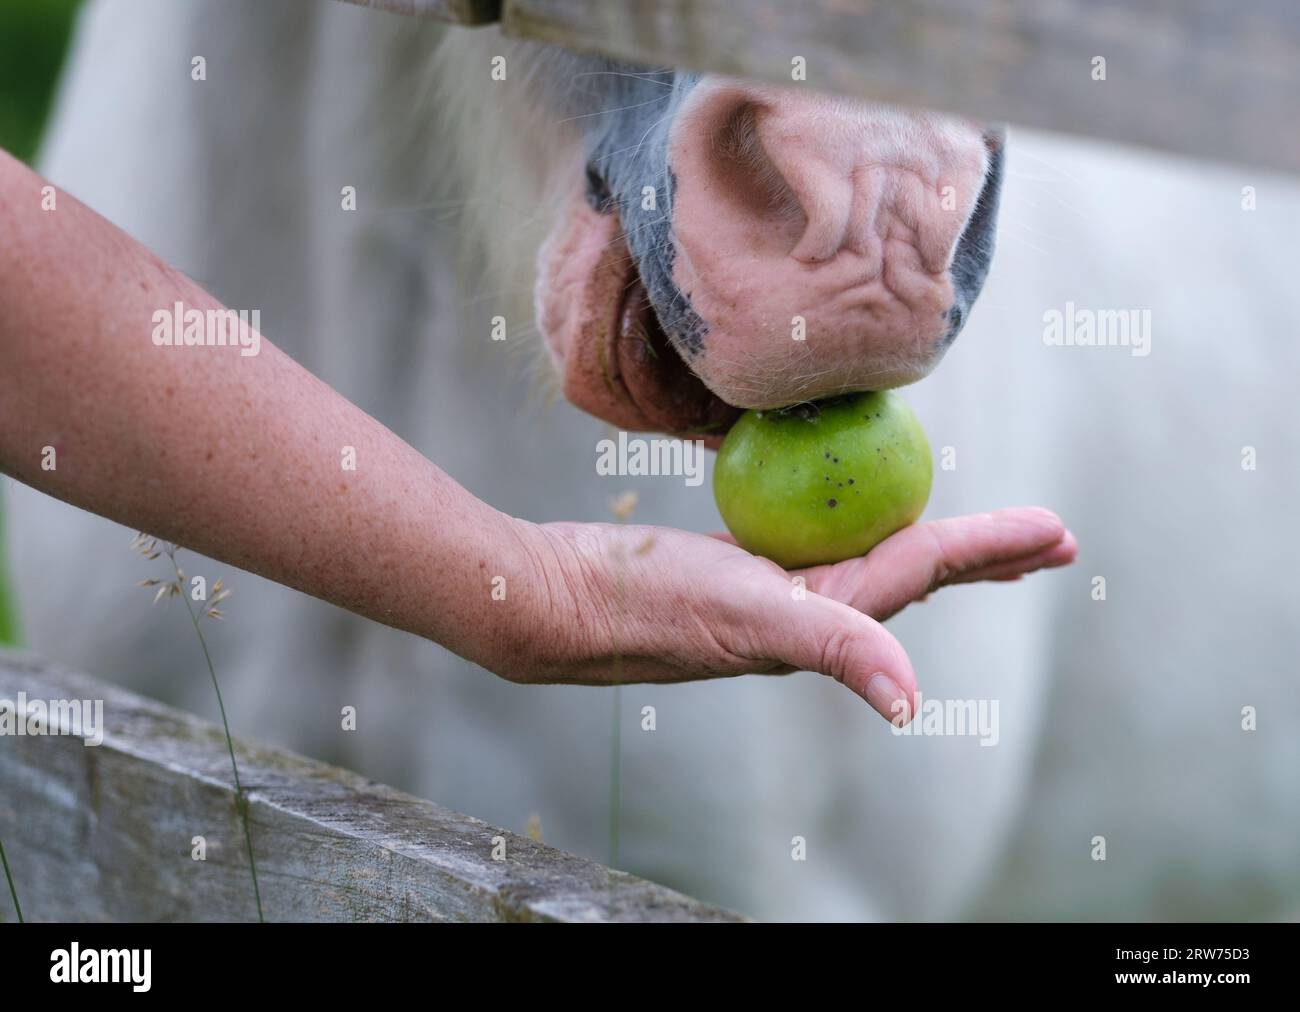 A Person Feeding An Apple To A Horse Stock Photo